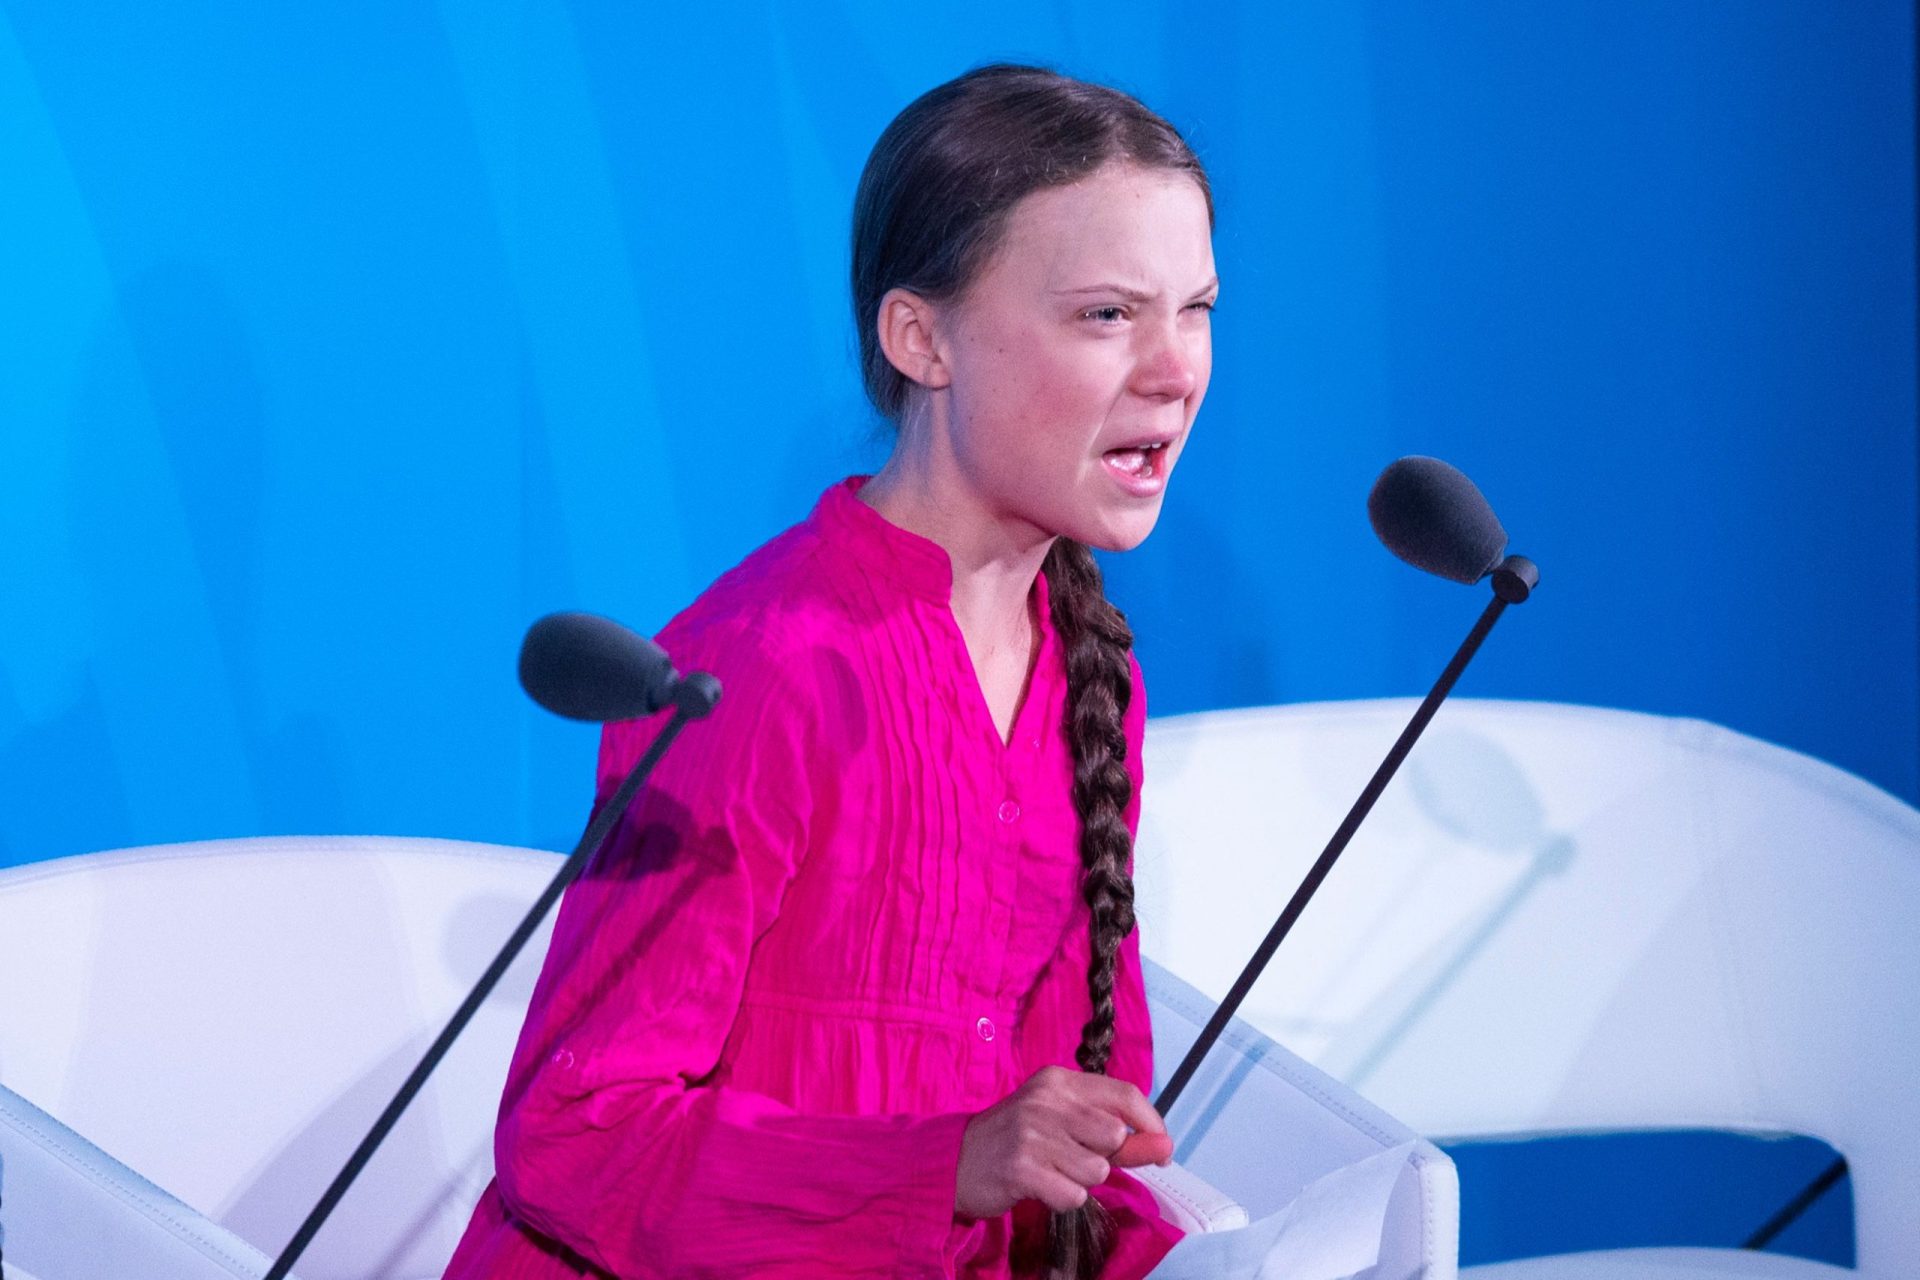 O discurso emocionado de Greta Thunberg para os líderes mundiais: “Roubaram-me os sonhos” | Vídeo